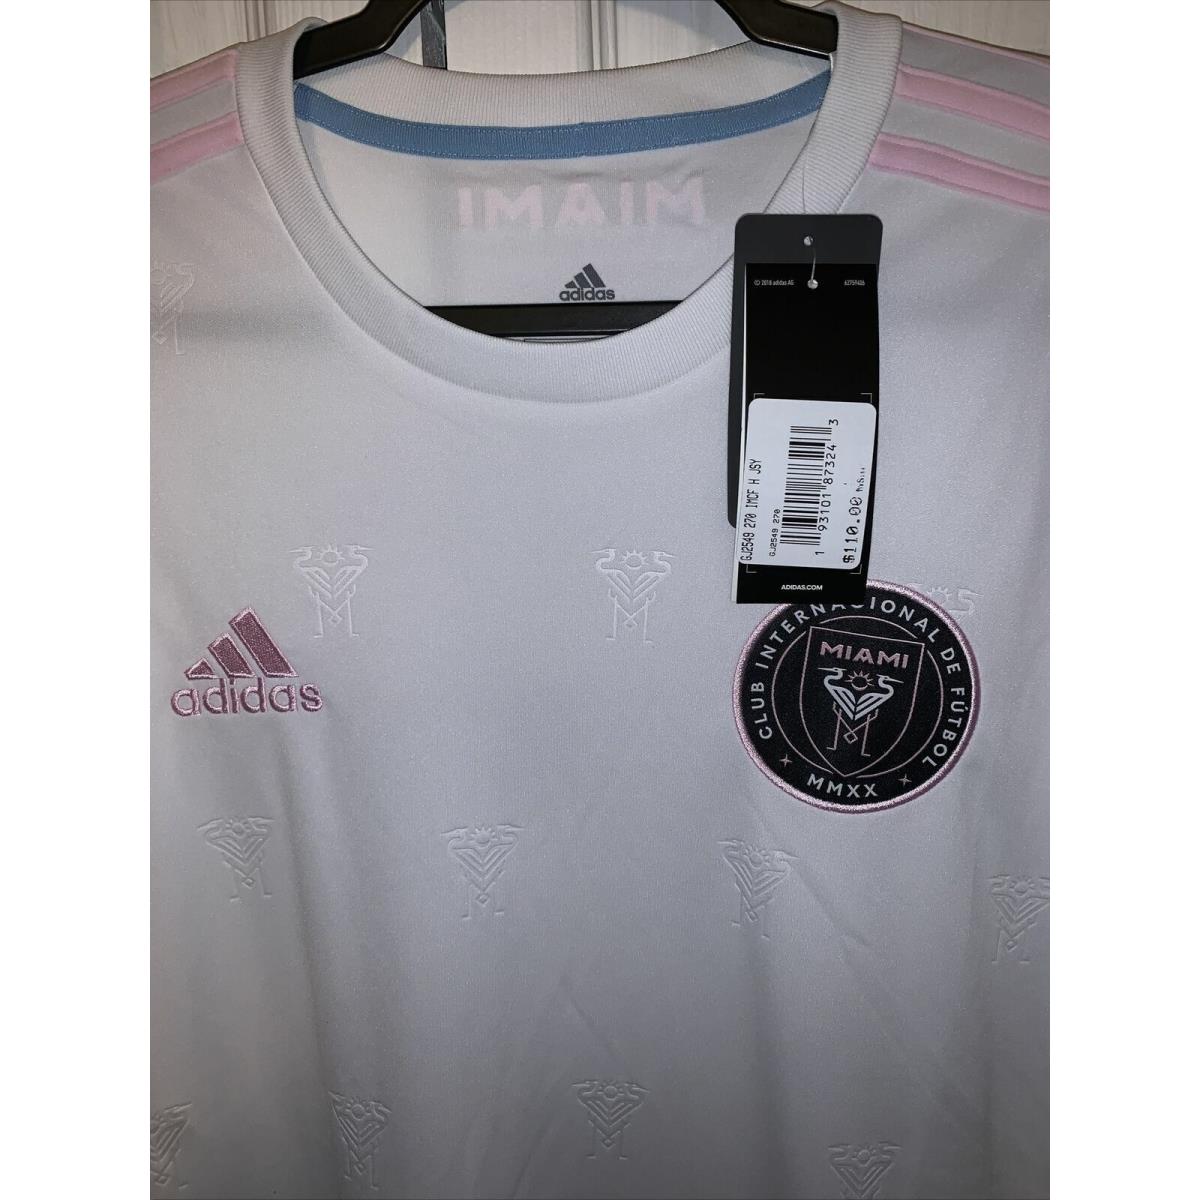 David Beckham Inter Miami CF Adidas 2020 Primary Jersey -white Size M L